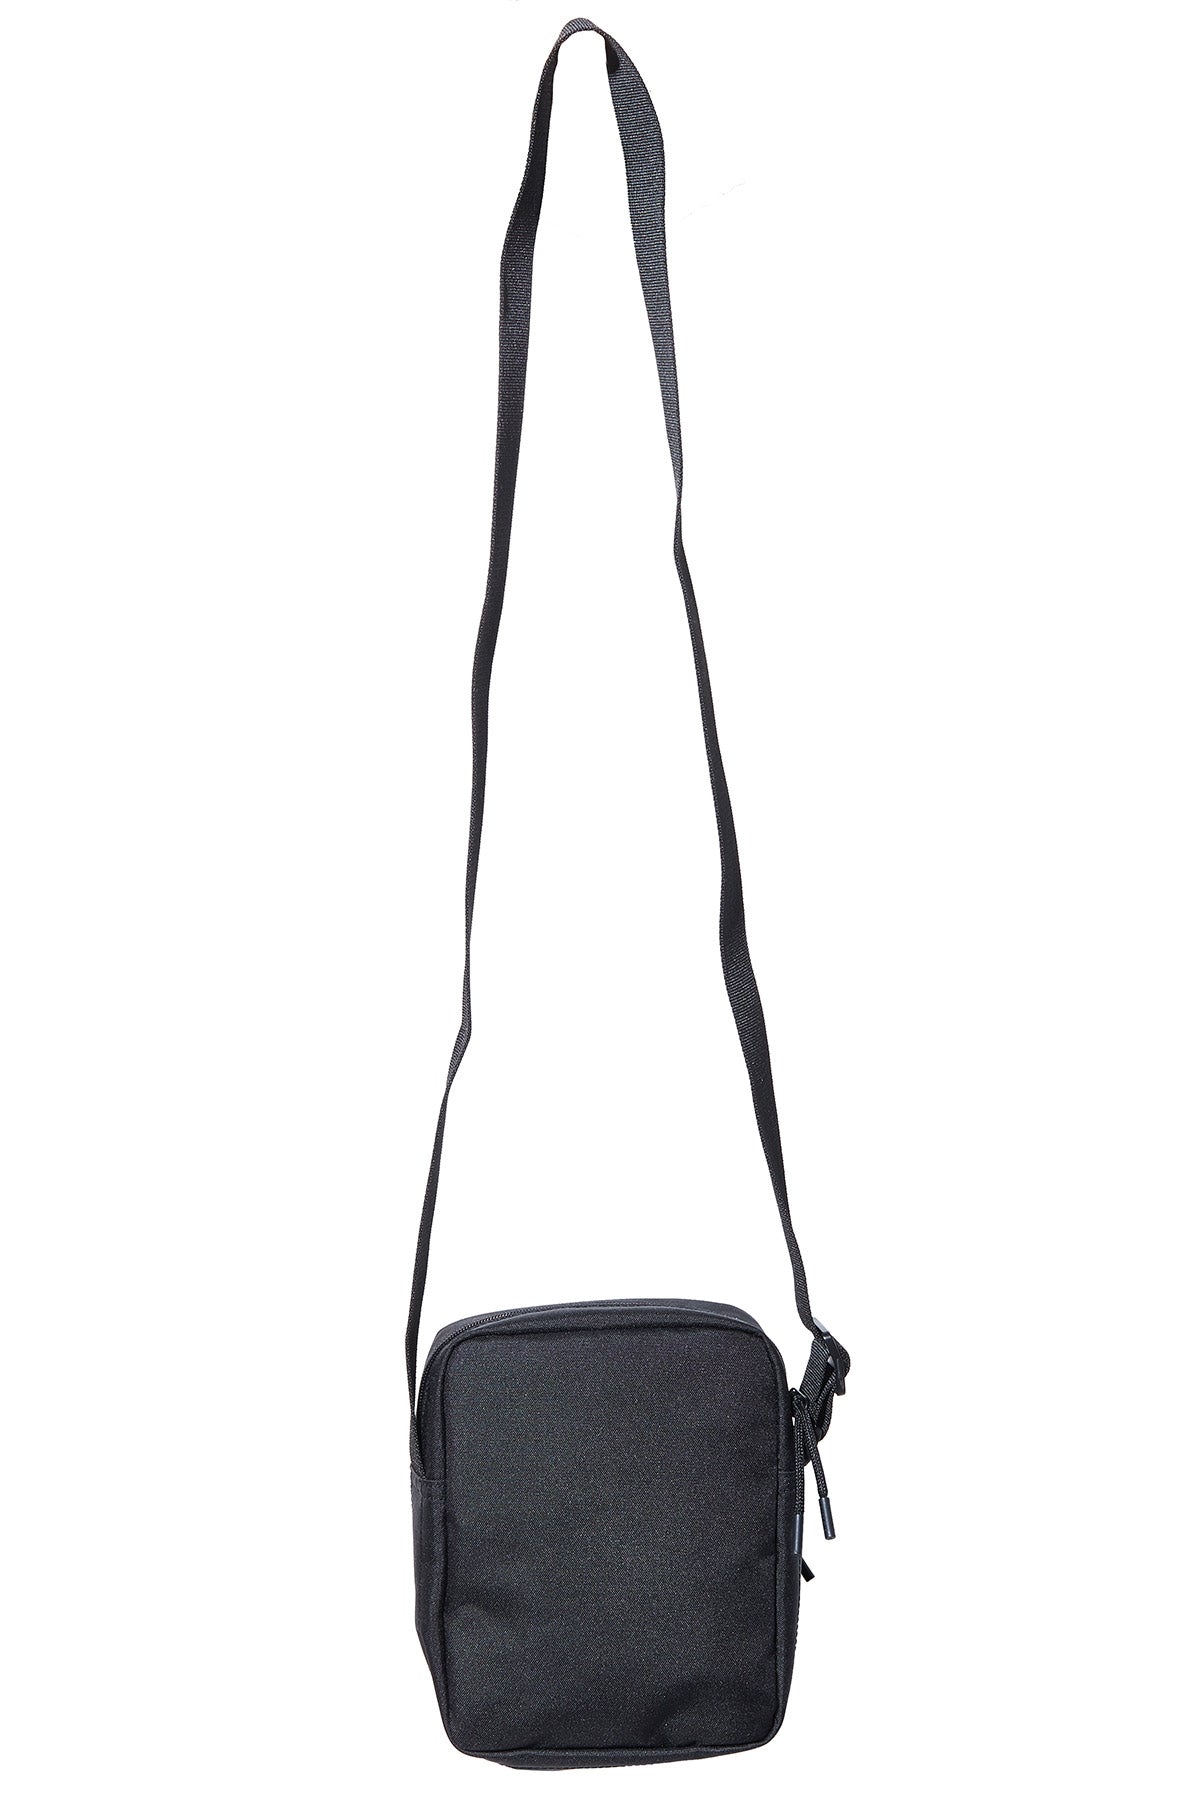 Lacoste Neocroc Vert Camera Bag Black – Universal Store